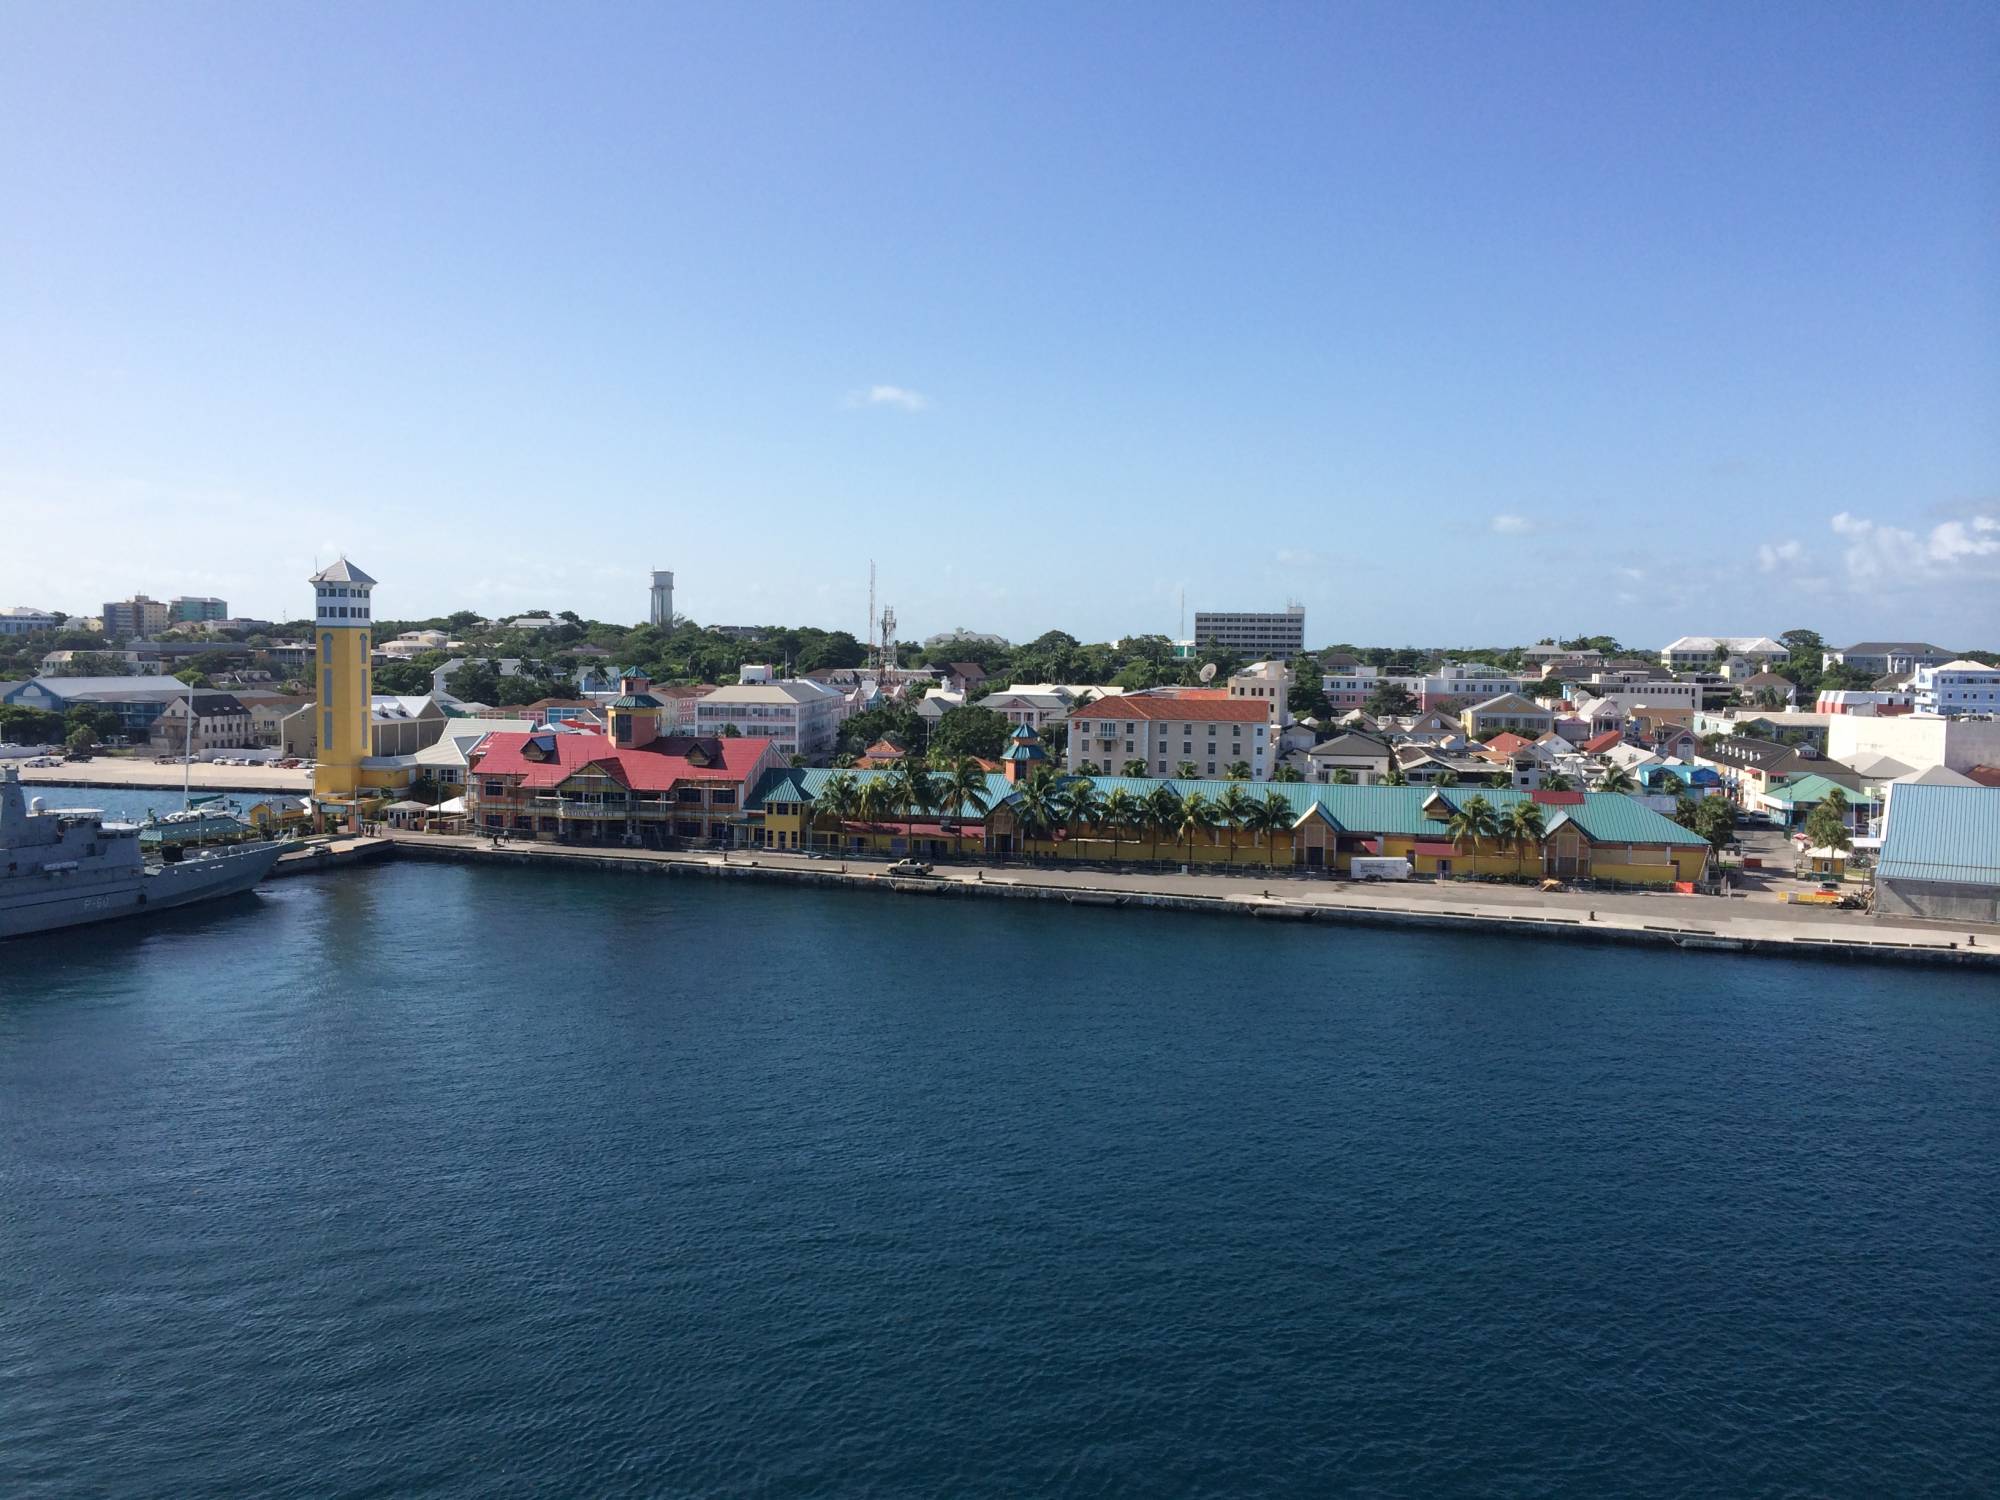 Nassau, Bahamas - view from the Disney Dream